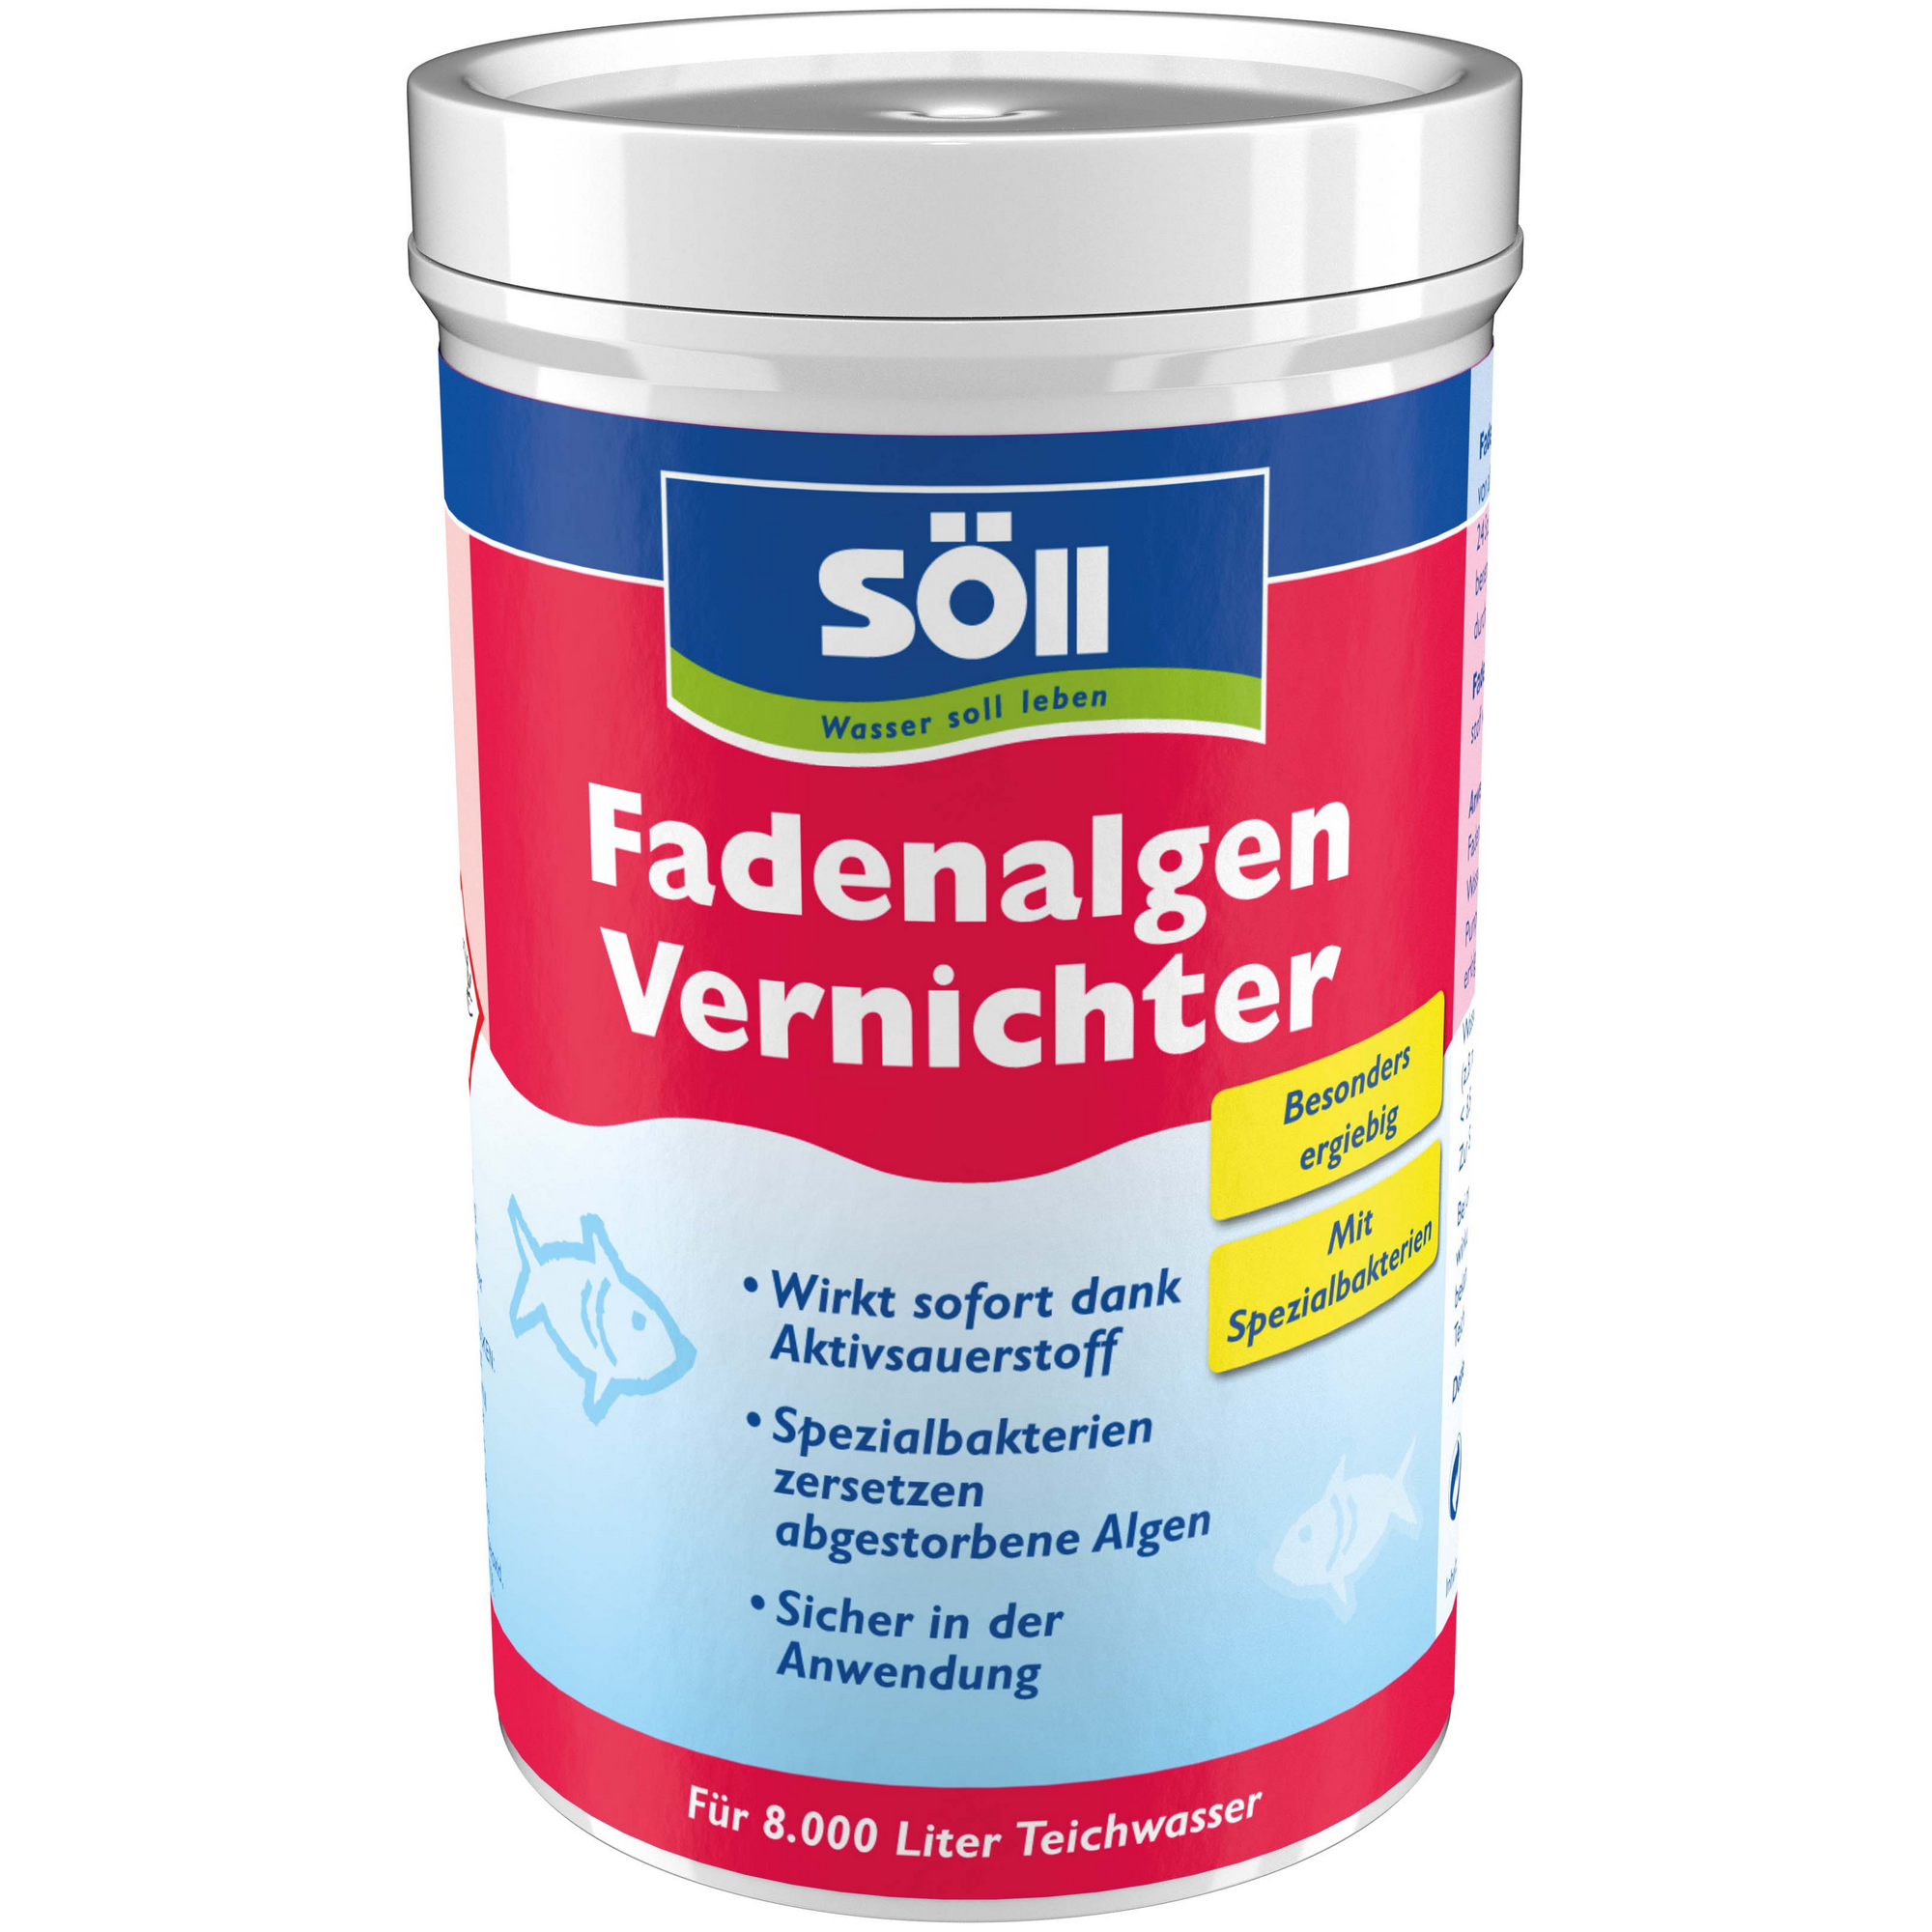 Fadenalgen-Vernichter 250 g + product picture